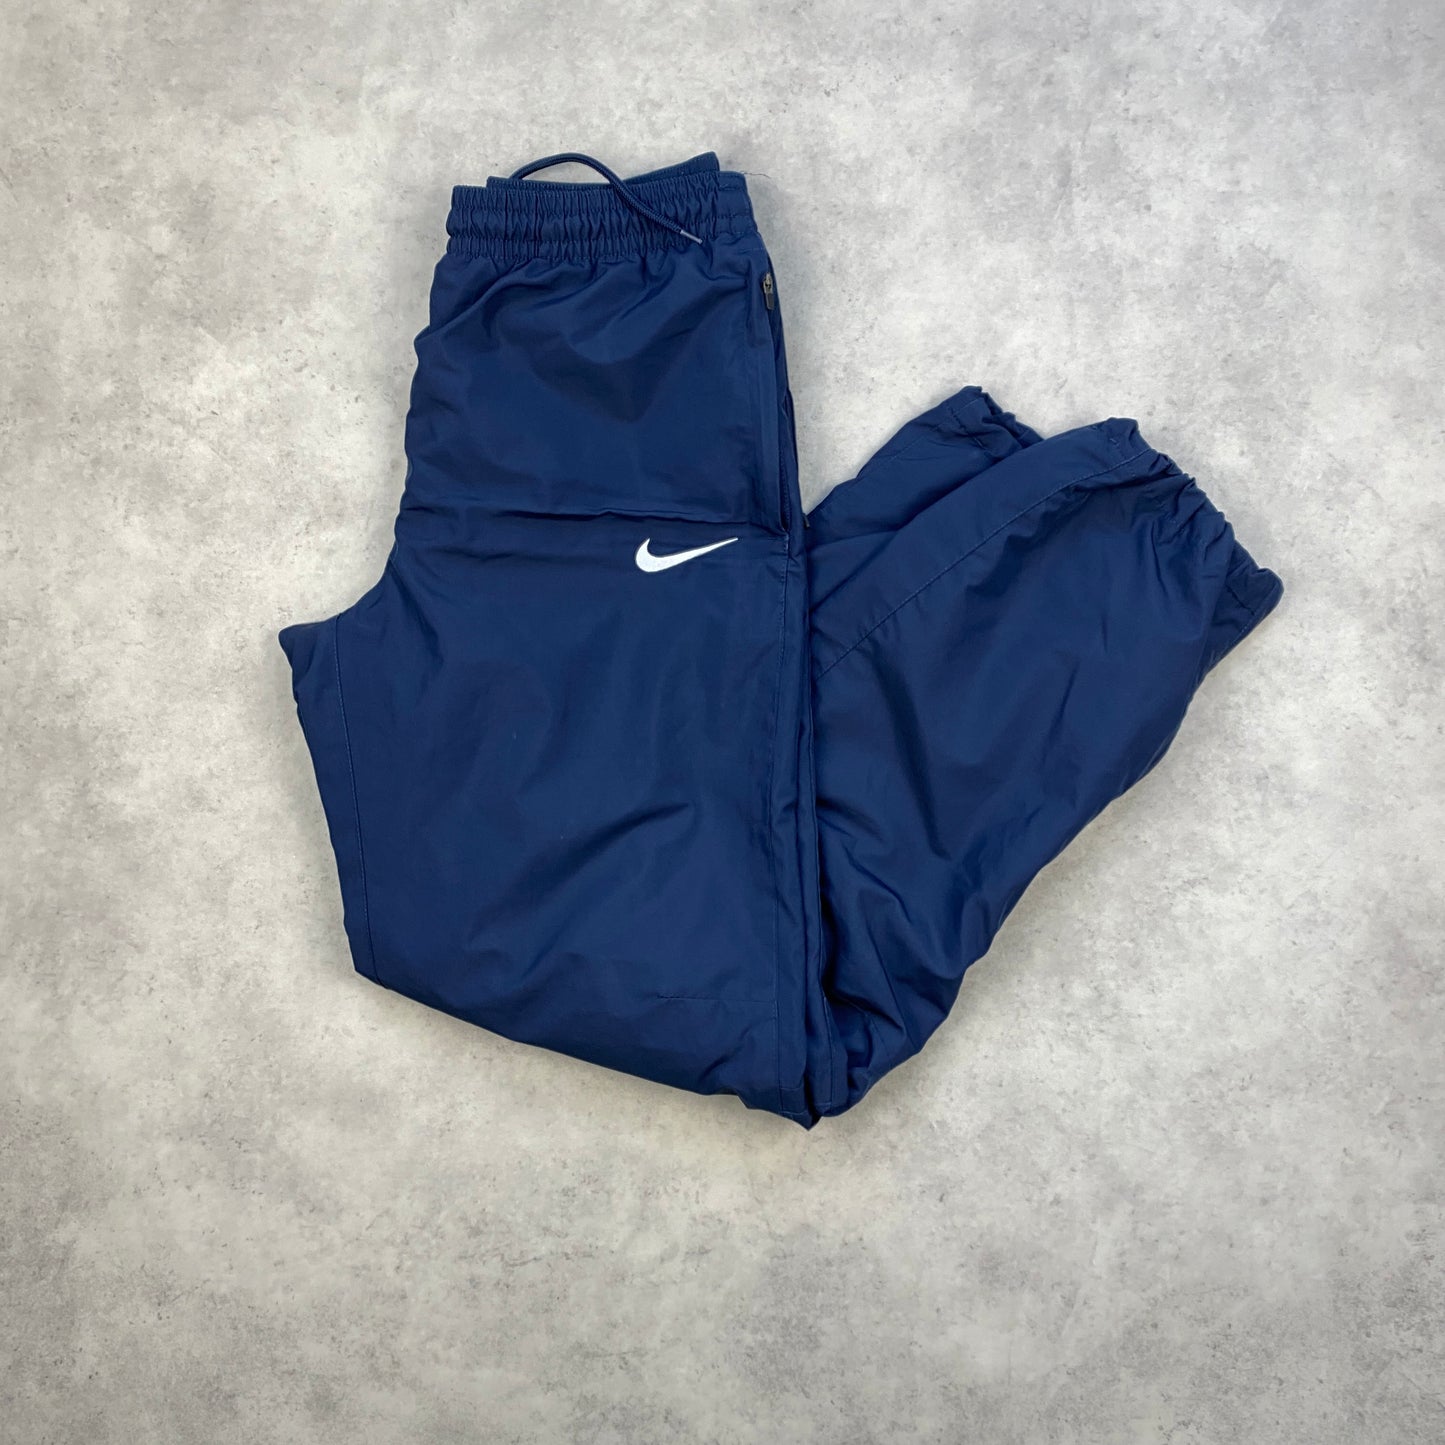 Nike track pants (S-M)